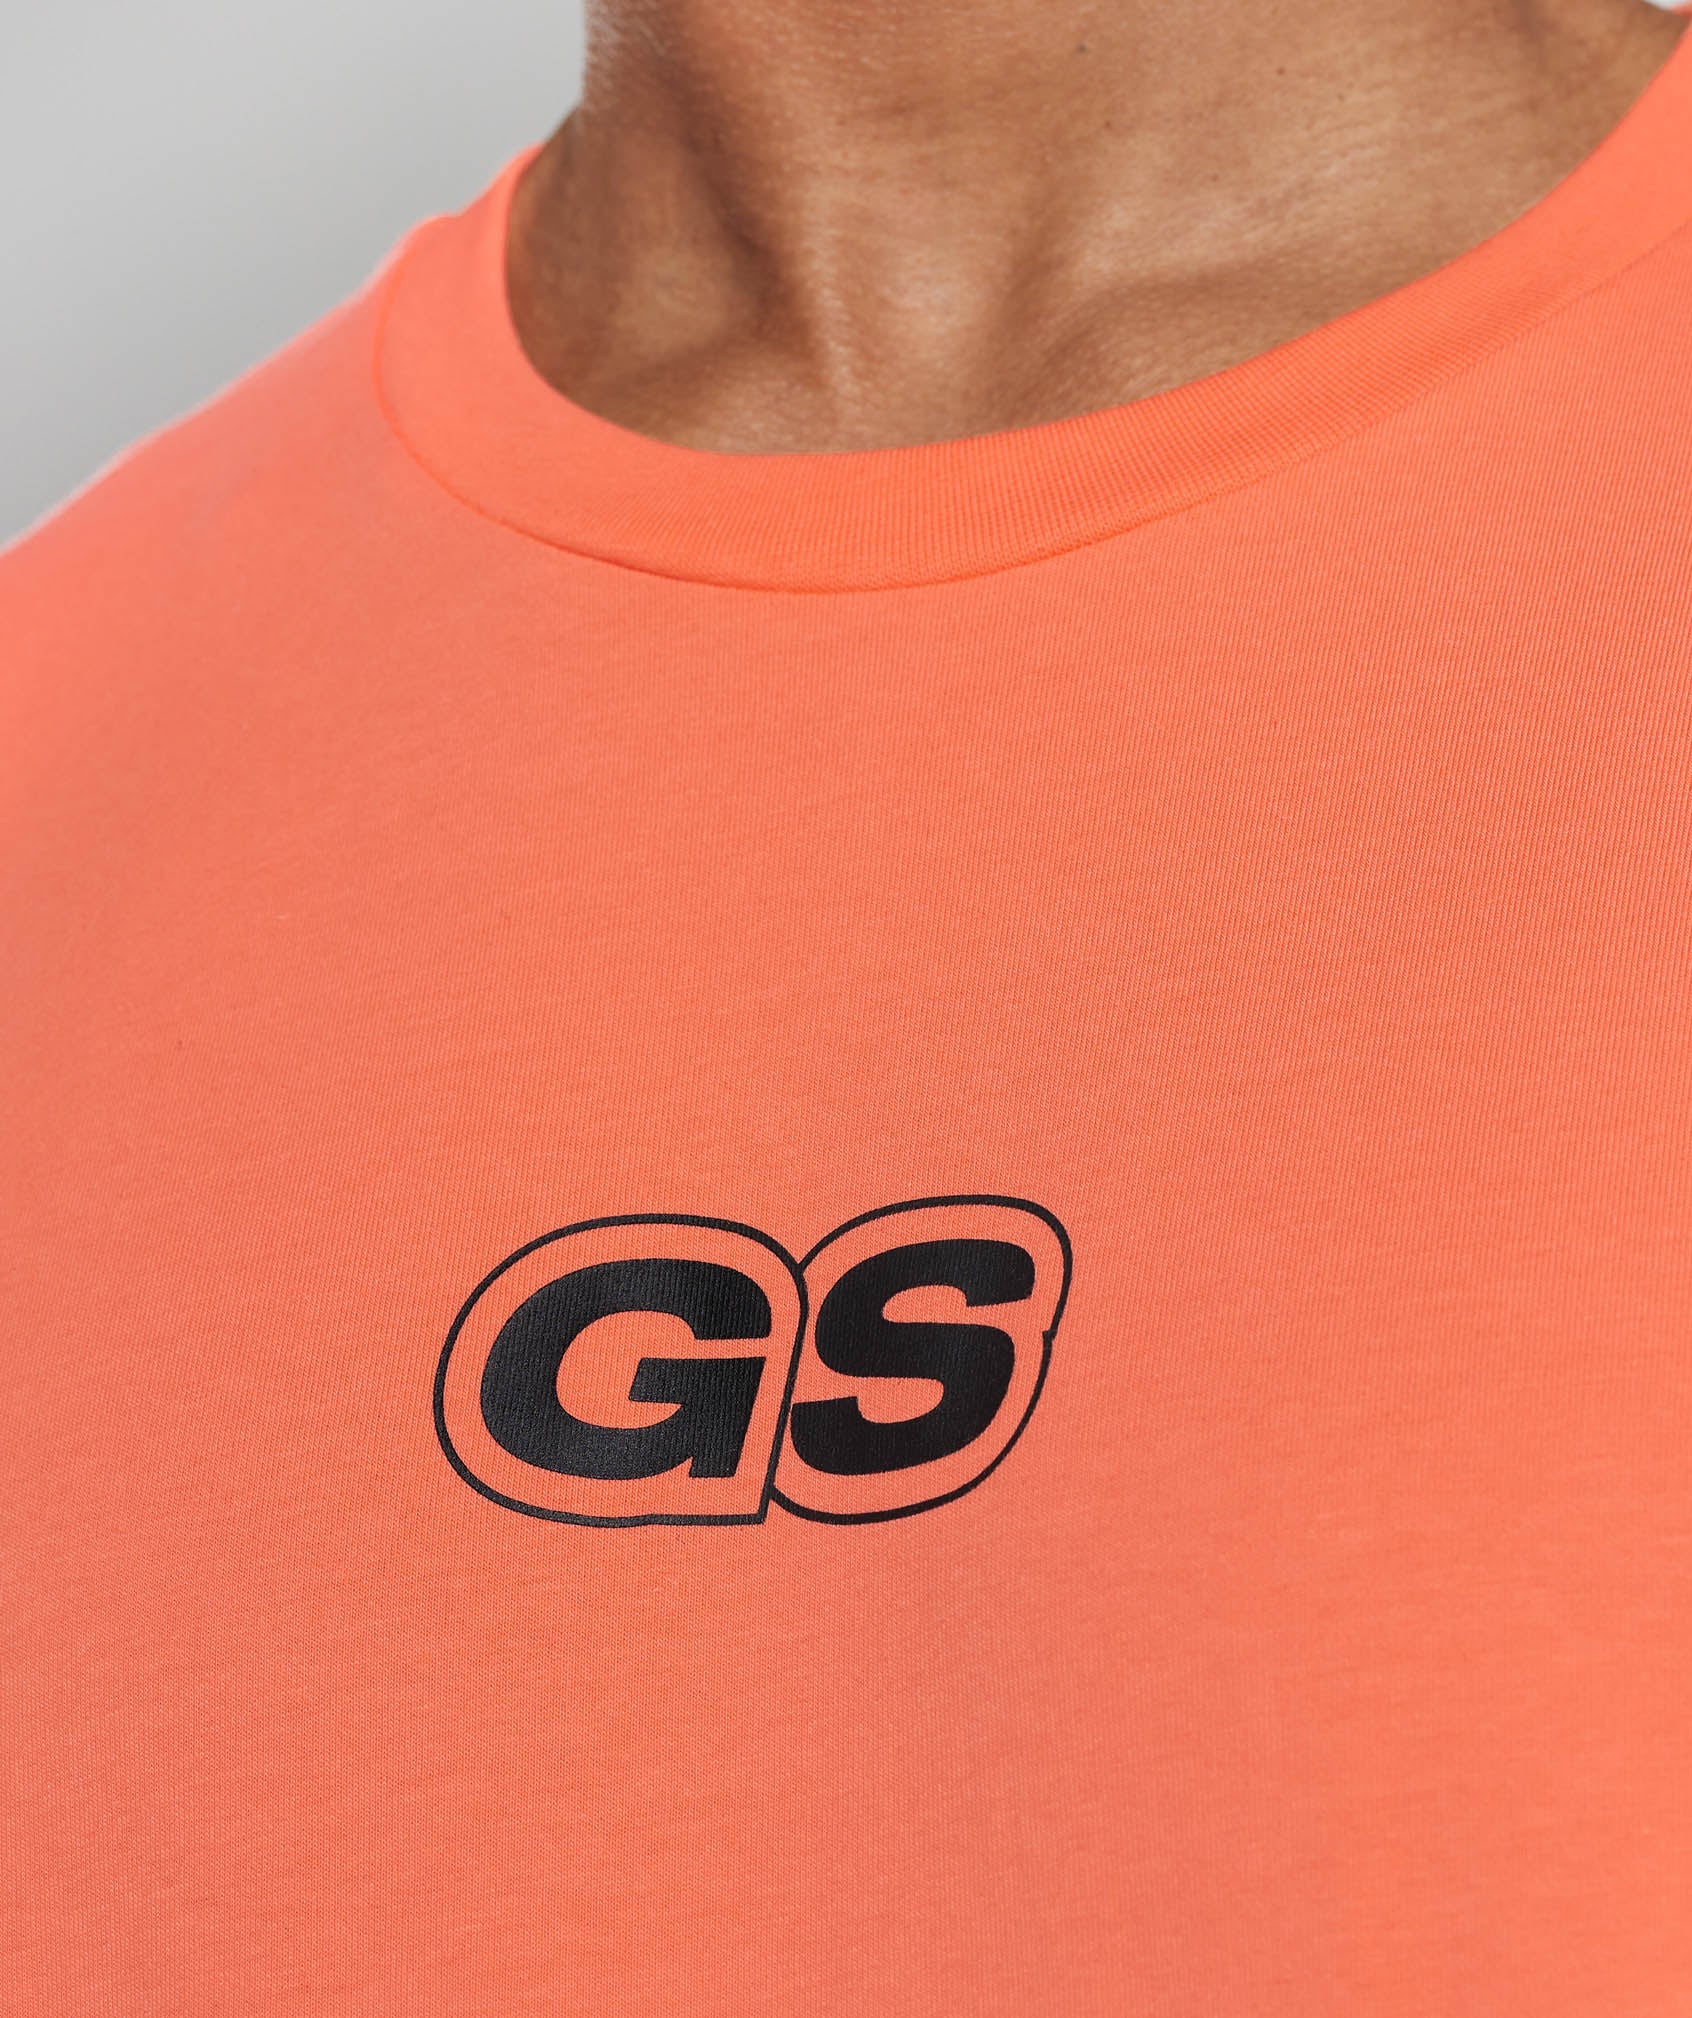 GMSHK Oversized T-Shirt in Solstice Orange - view 5